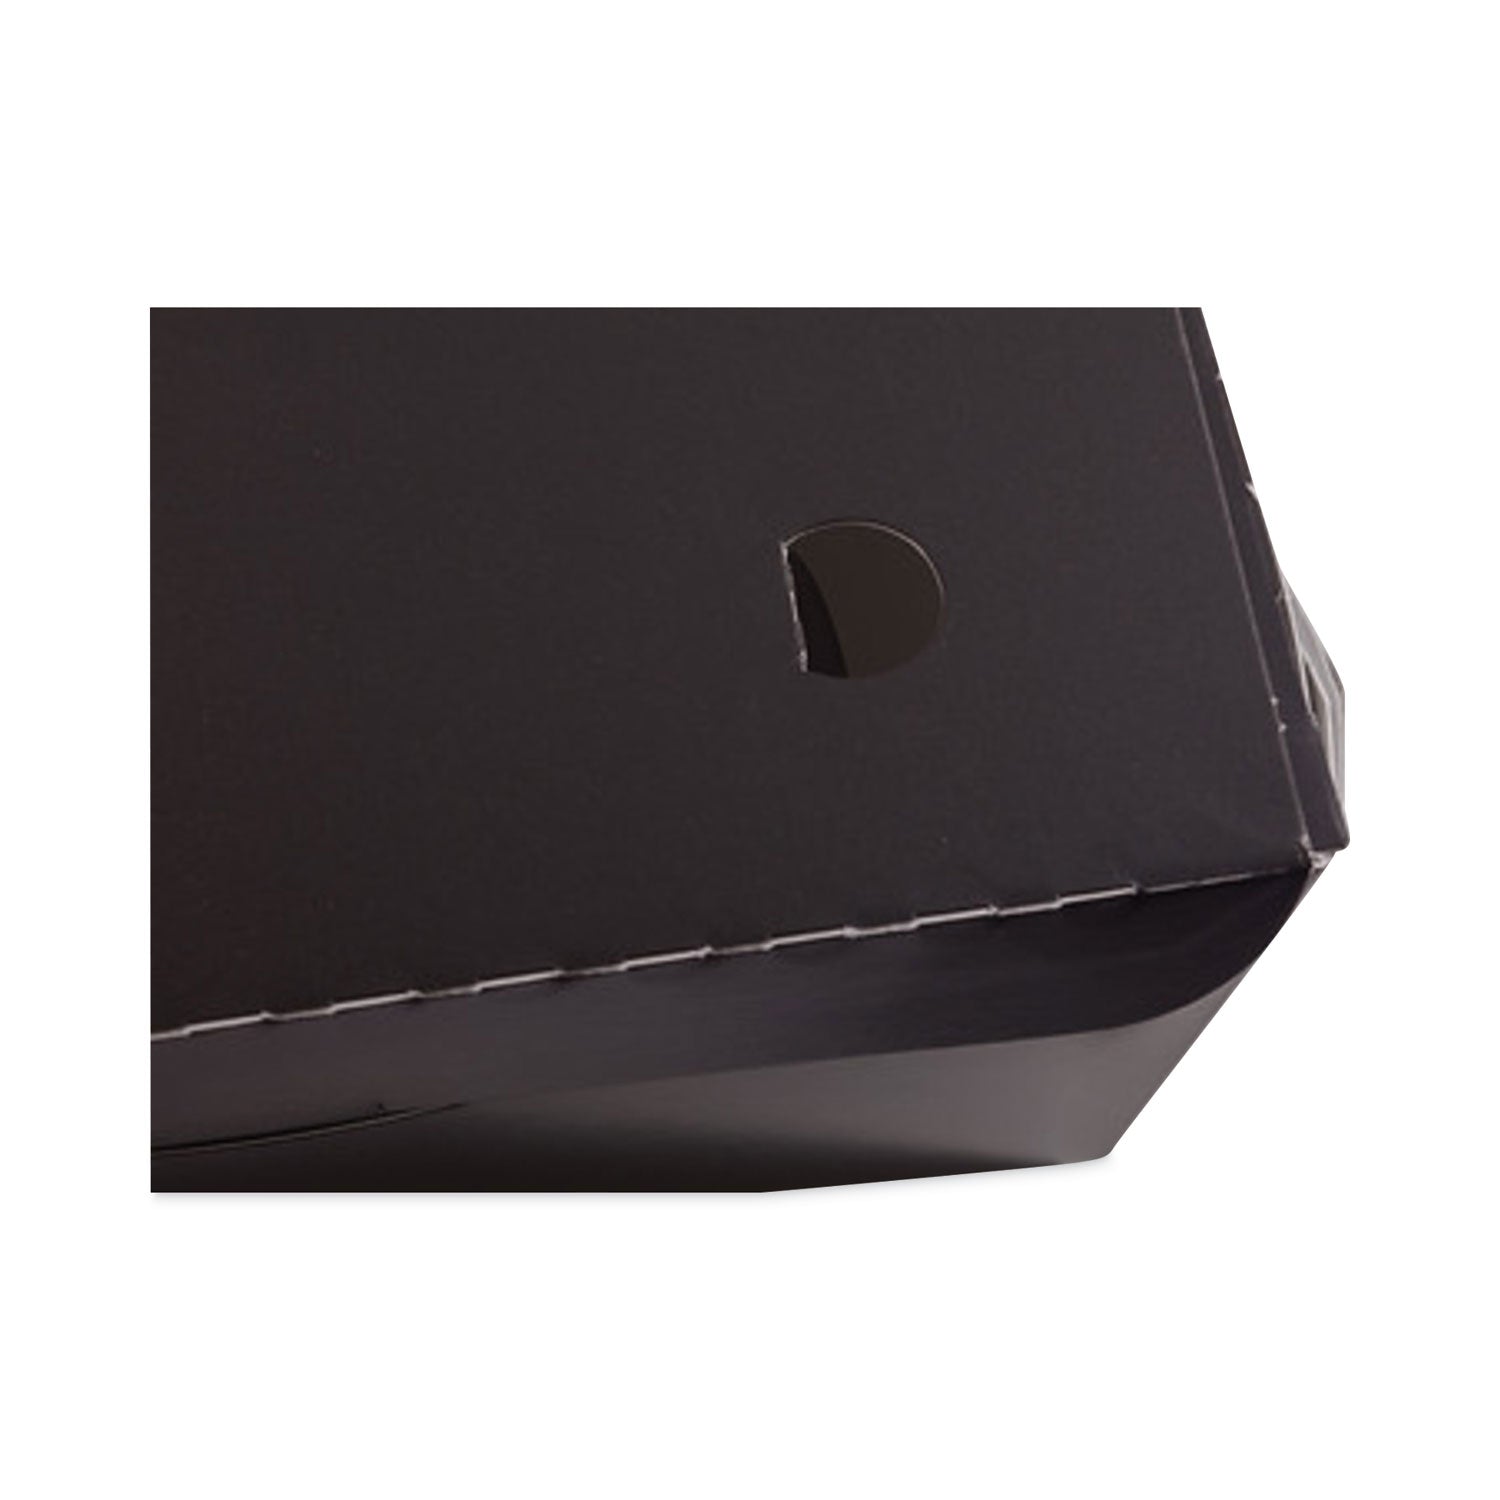 earthchoice-onebox-paper-box-55-oz-9-x-485-x-2-black-100-carton_pctnob02b - 3